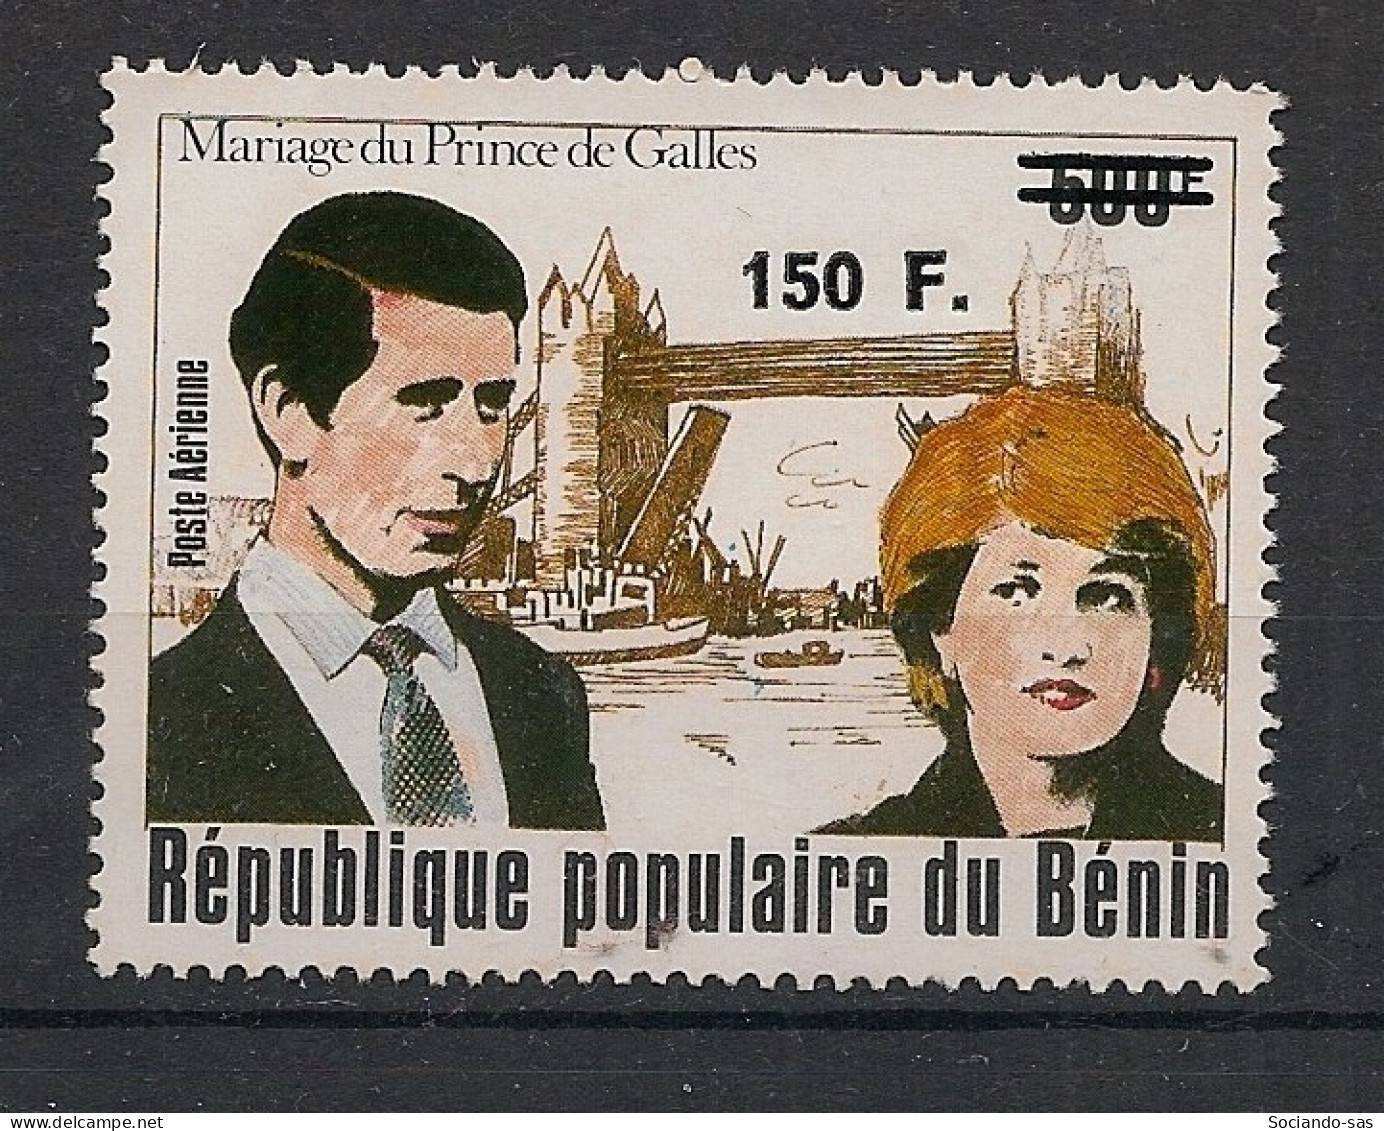 BENIN - 1995 - N°Mi. 667 - Royal Wedding / Diana 150F / 500F - Neuf Luxe ** / MNH / Postfrisch - Benin - Dahomey (1960-...)